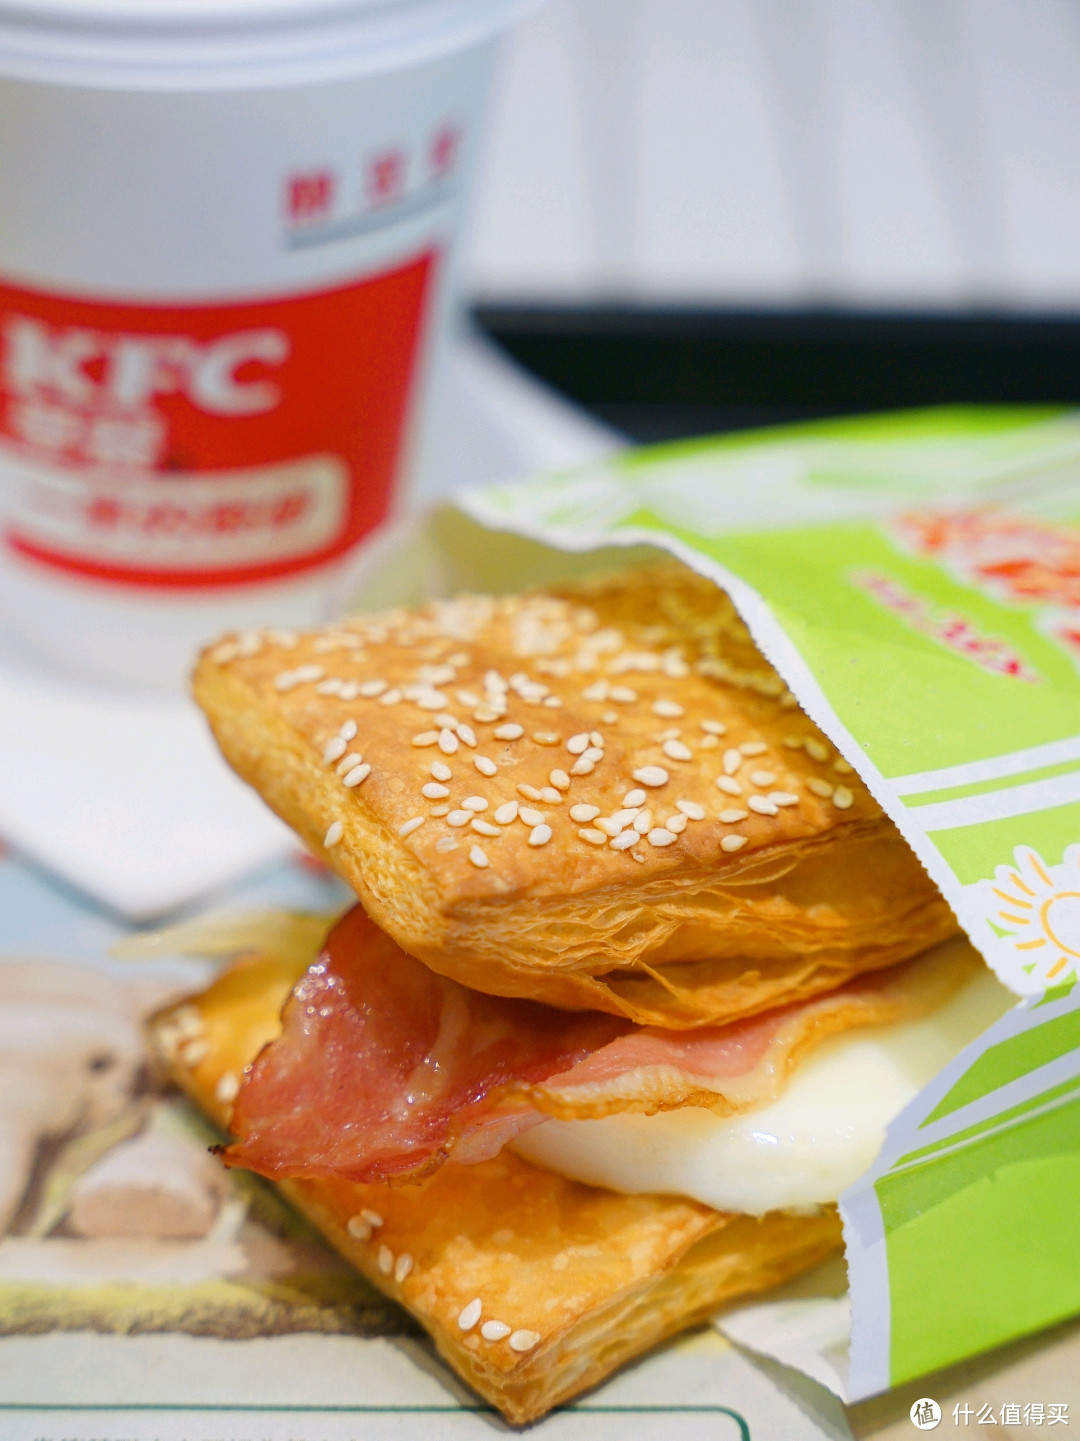 KFC久违的法风烧饼 豆浆 早餐套餐最低仅需5元